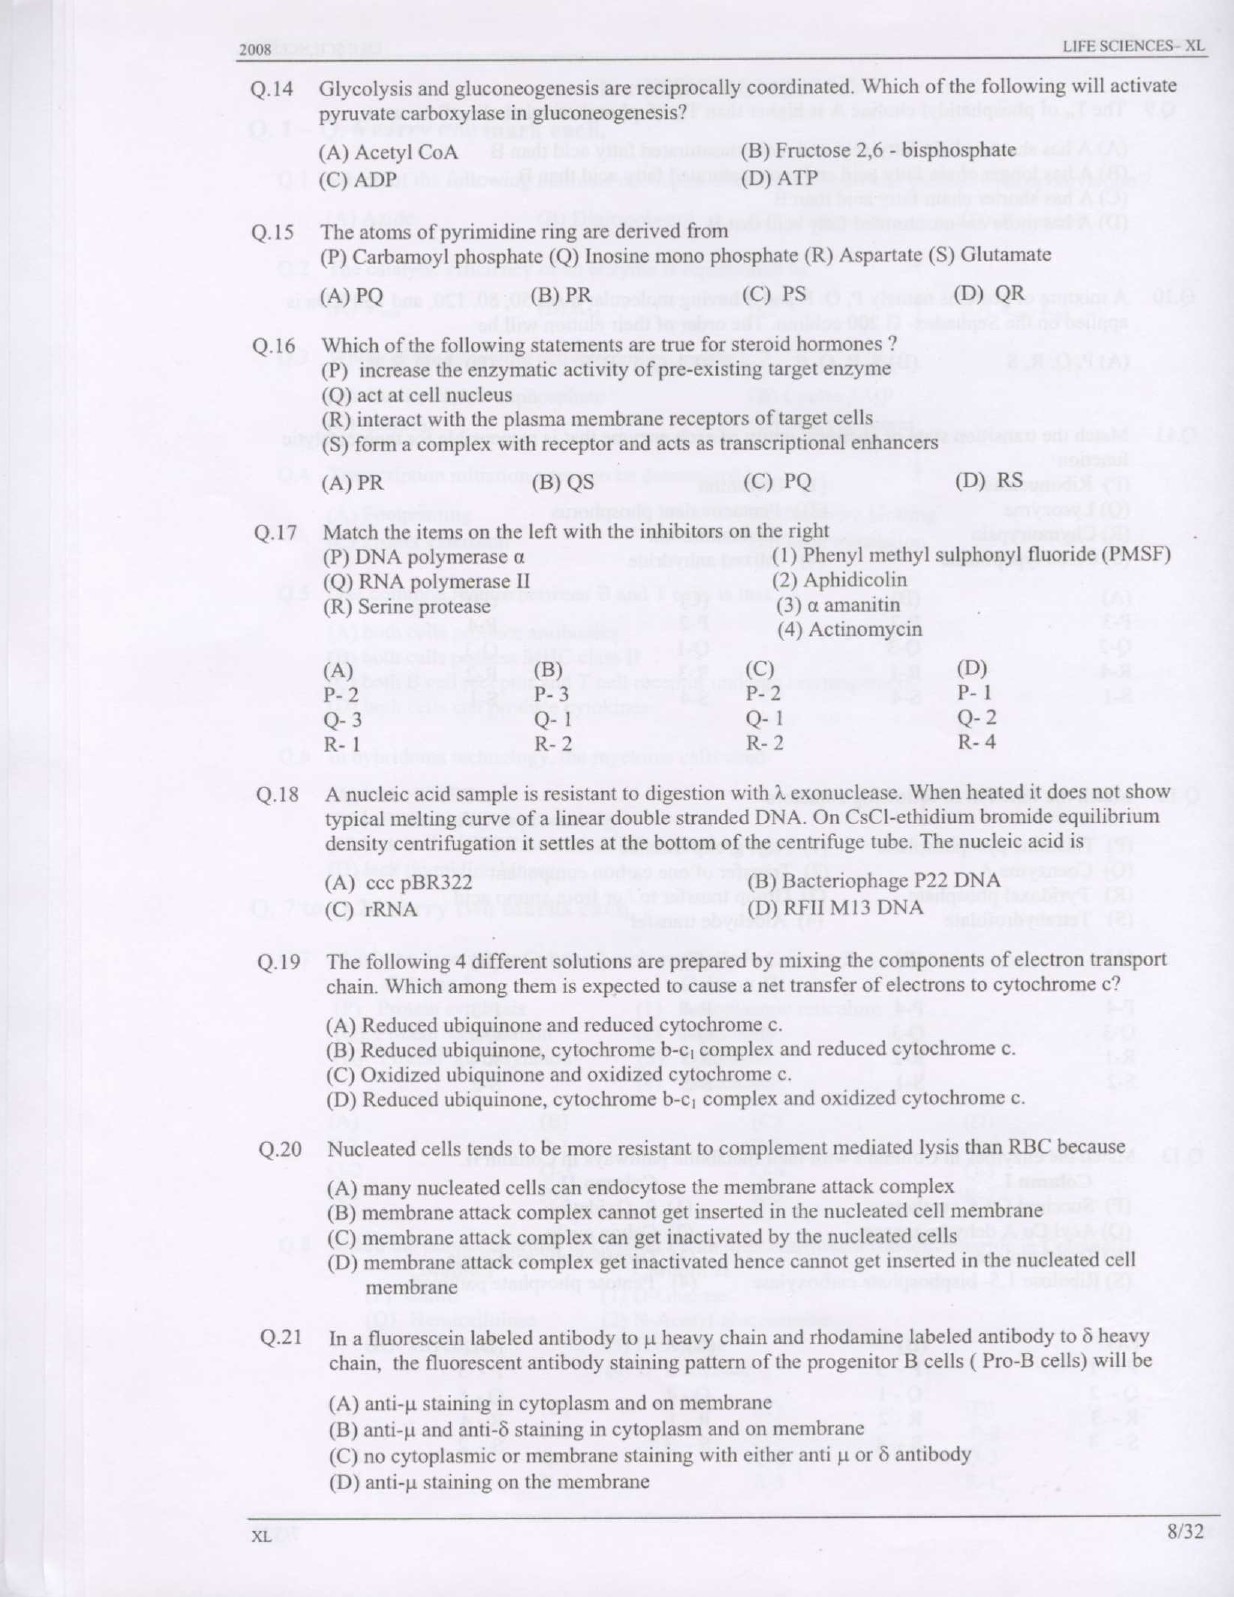 GATE Exam Question Paper 2008 Life Sciences 8